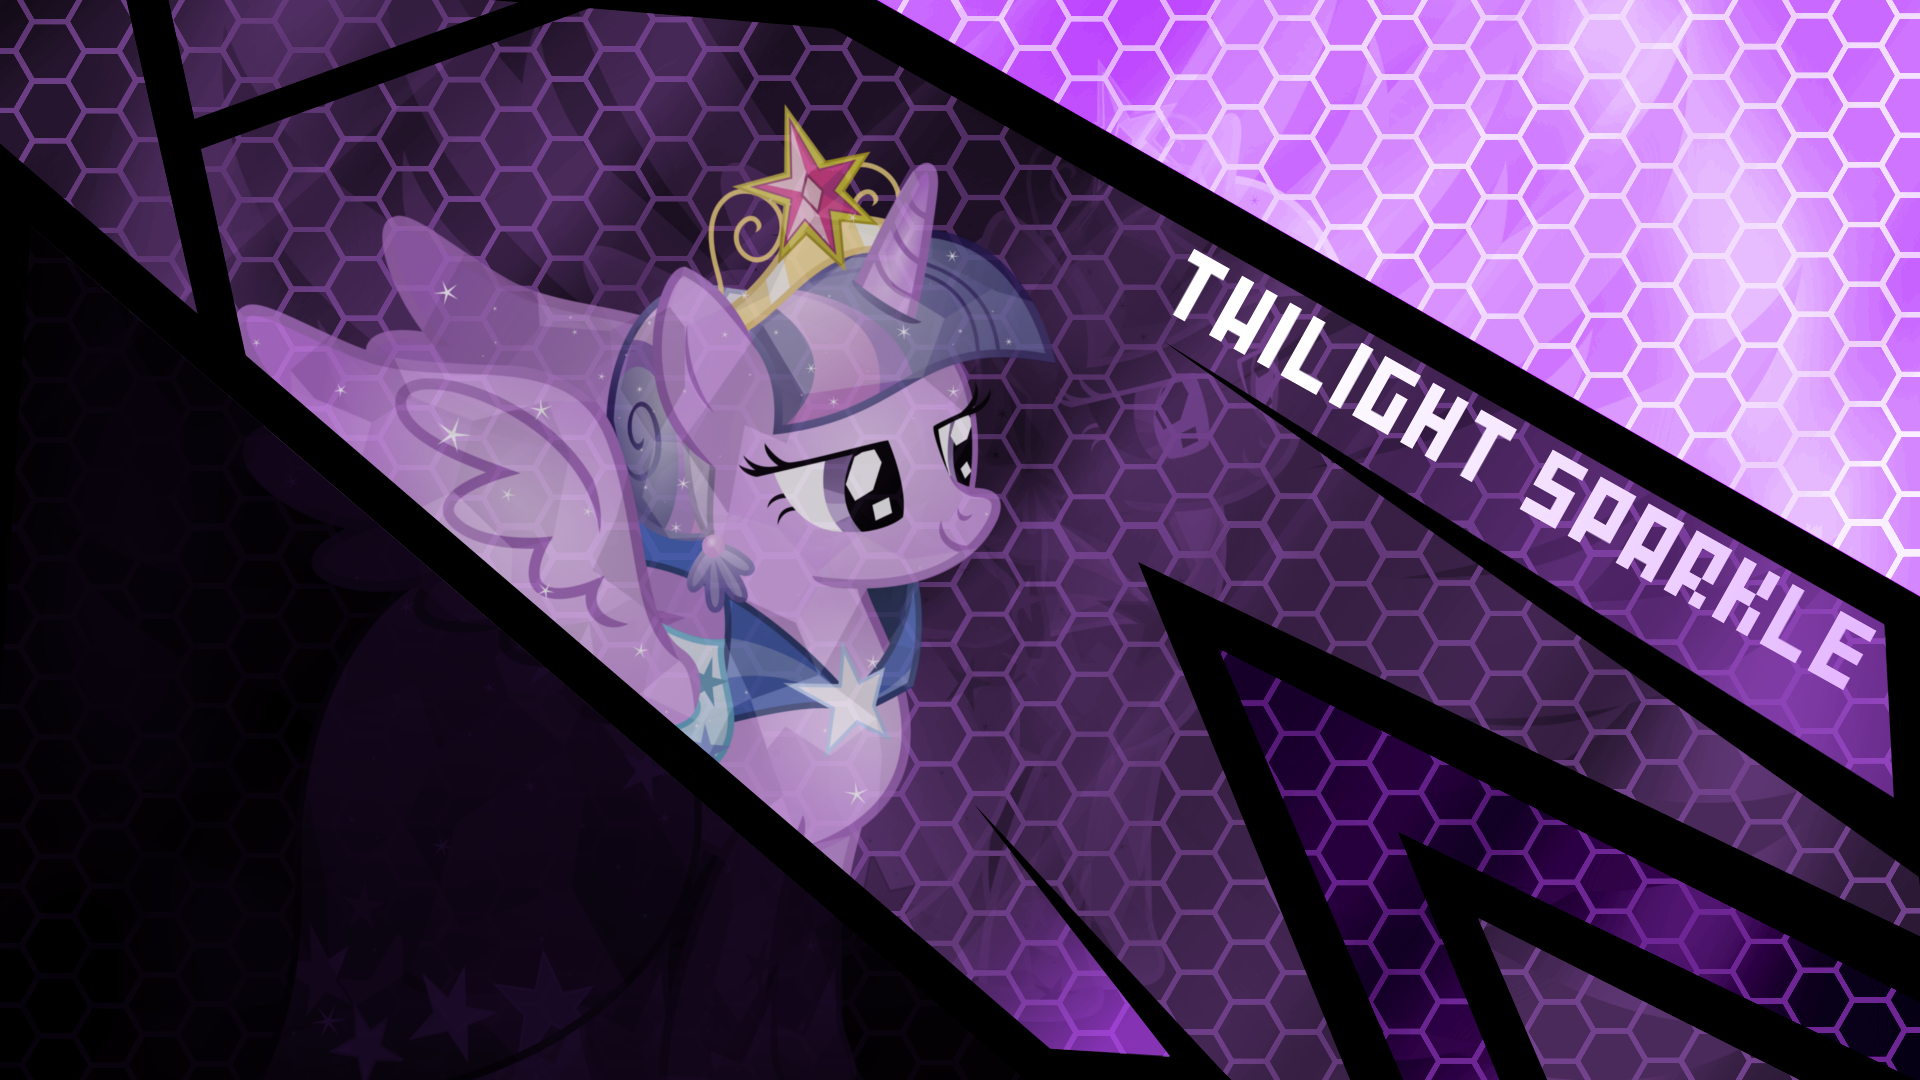 ar in my little pony: magic princess